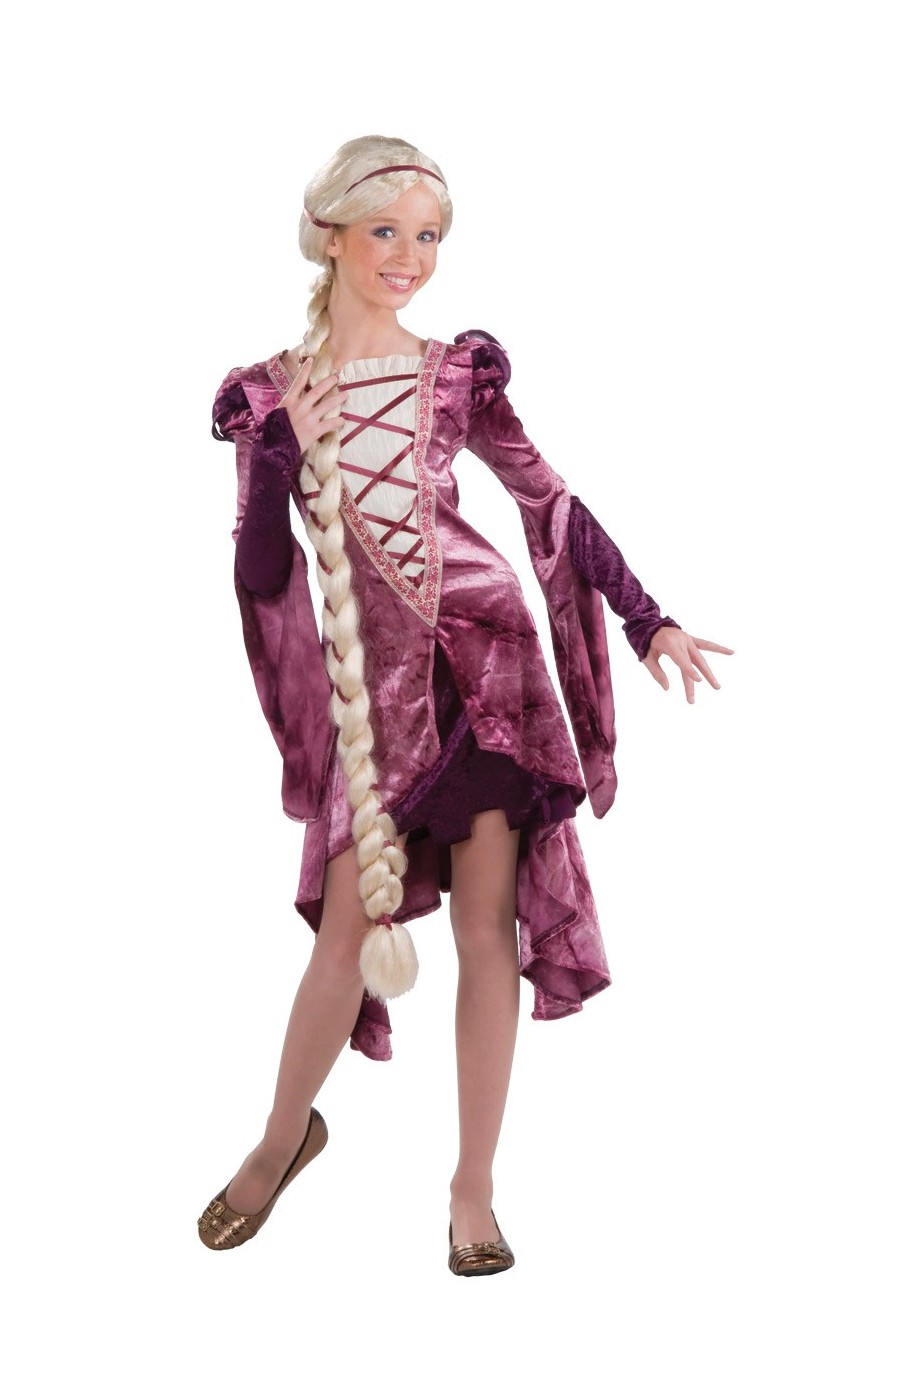 Costume Rapunzel lusso